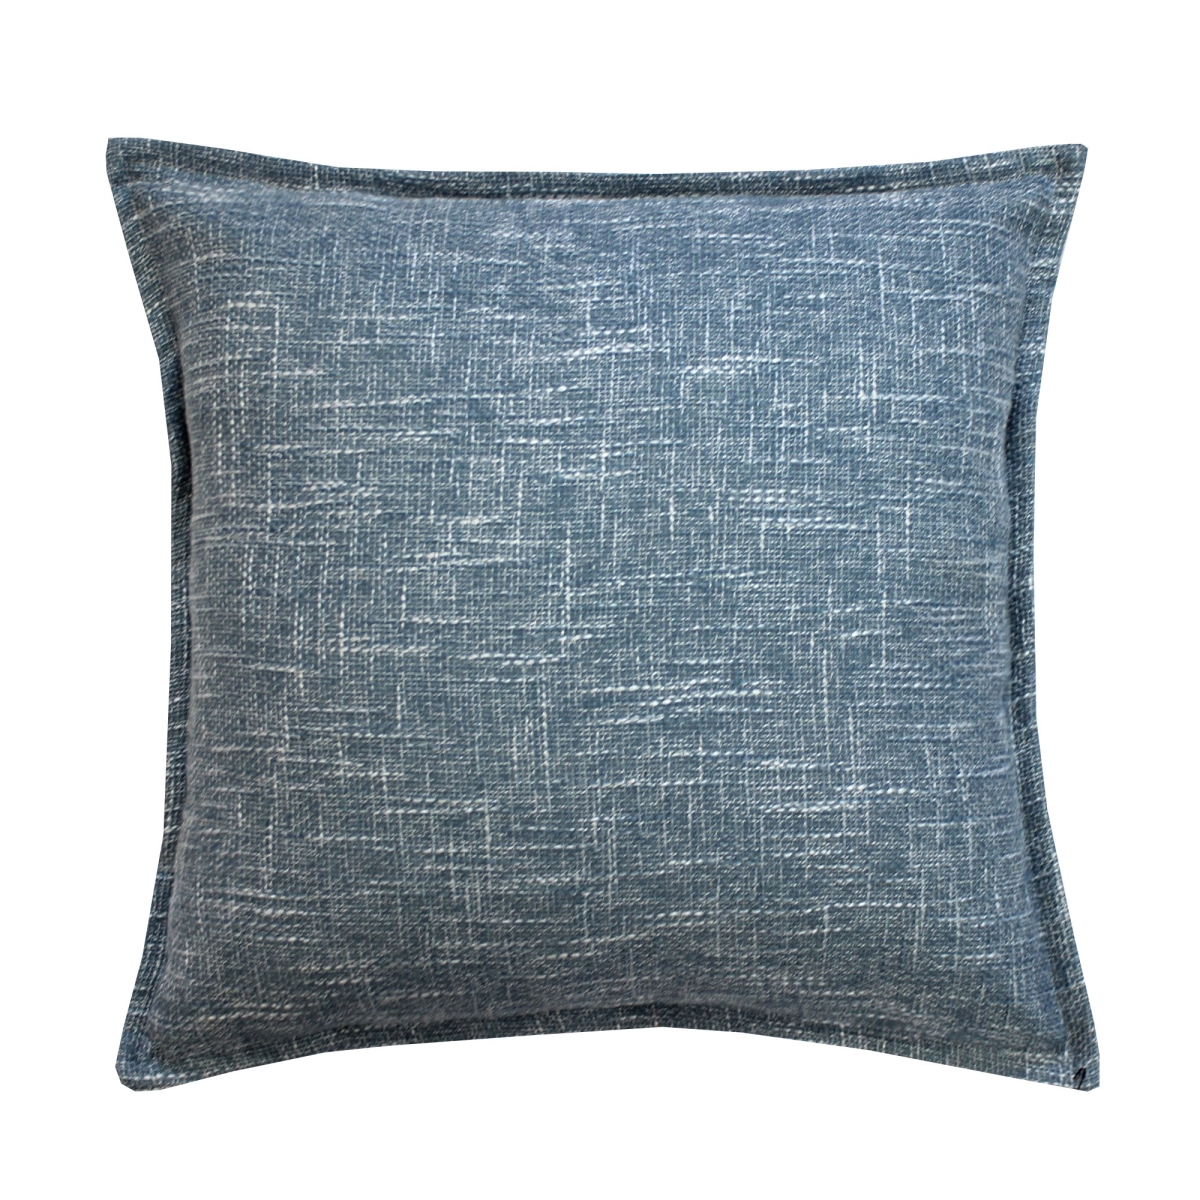 18 X 18 In. Burlap Decorative Cushion, Blue - 100 Percent Polyester